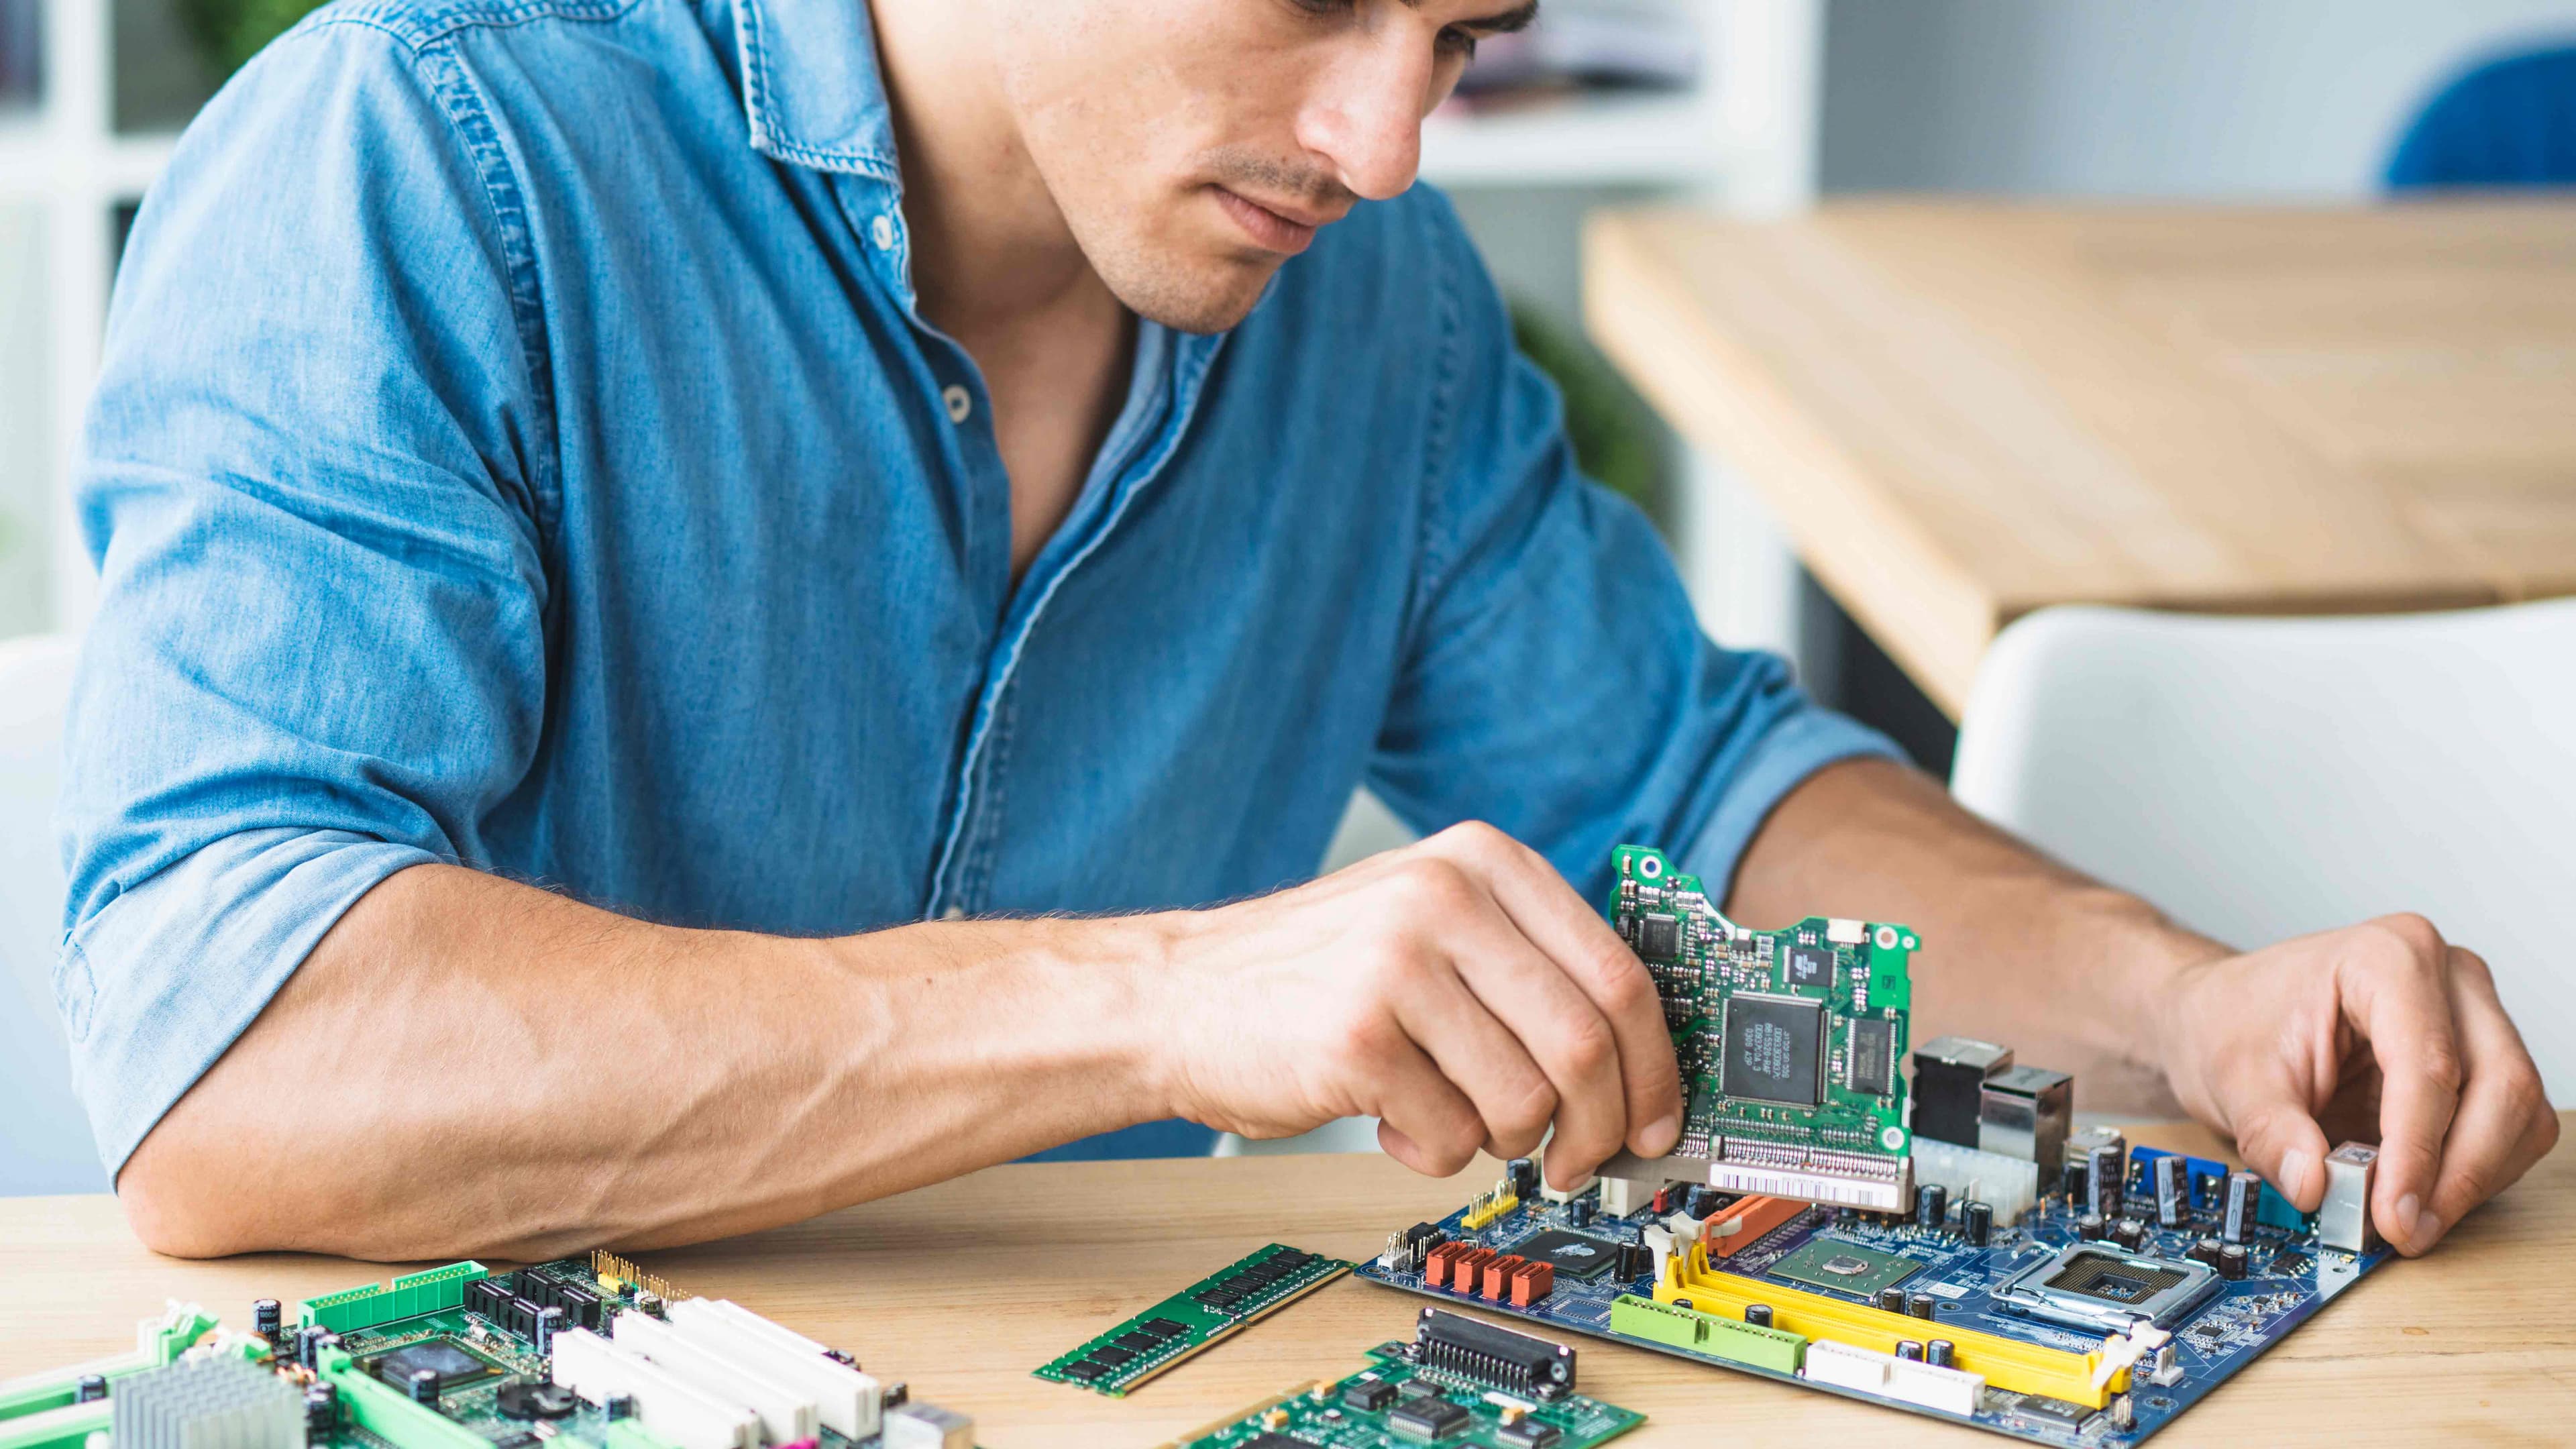 male-technician-assembling-hardware-equipment-s_web.jpg